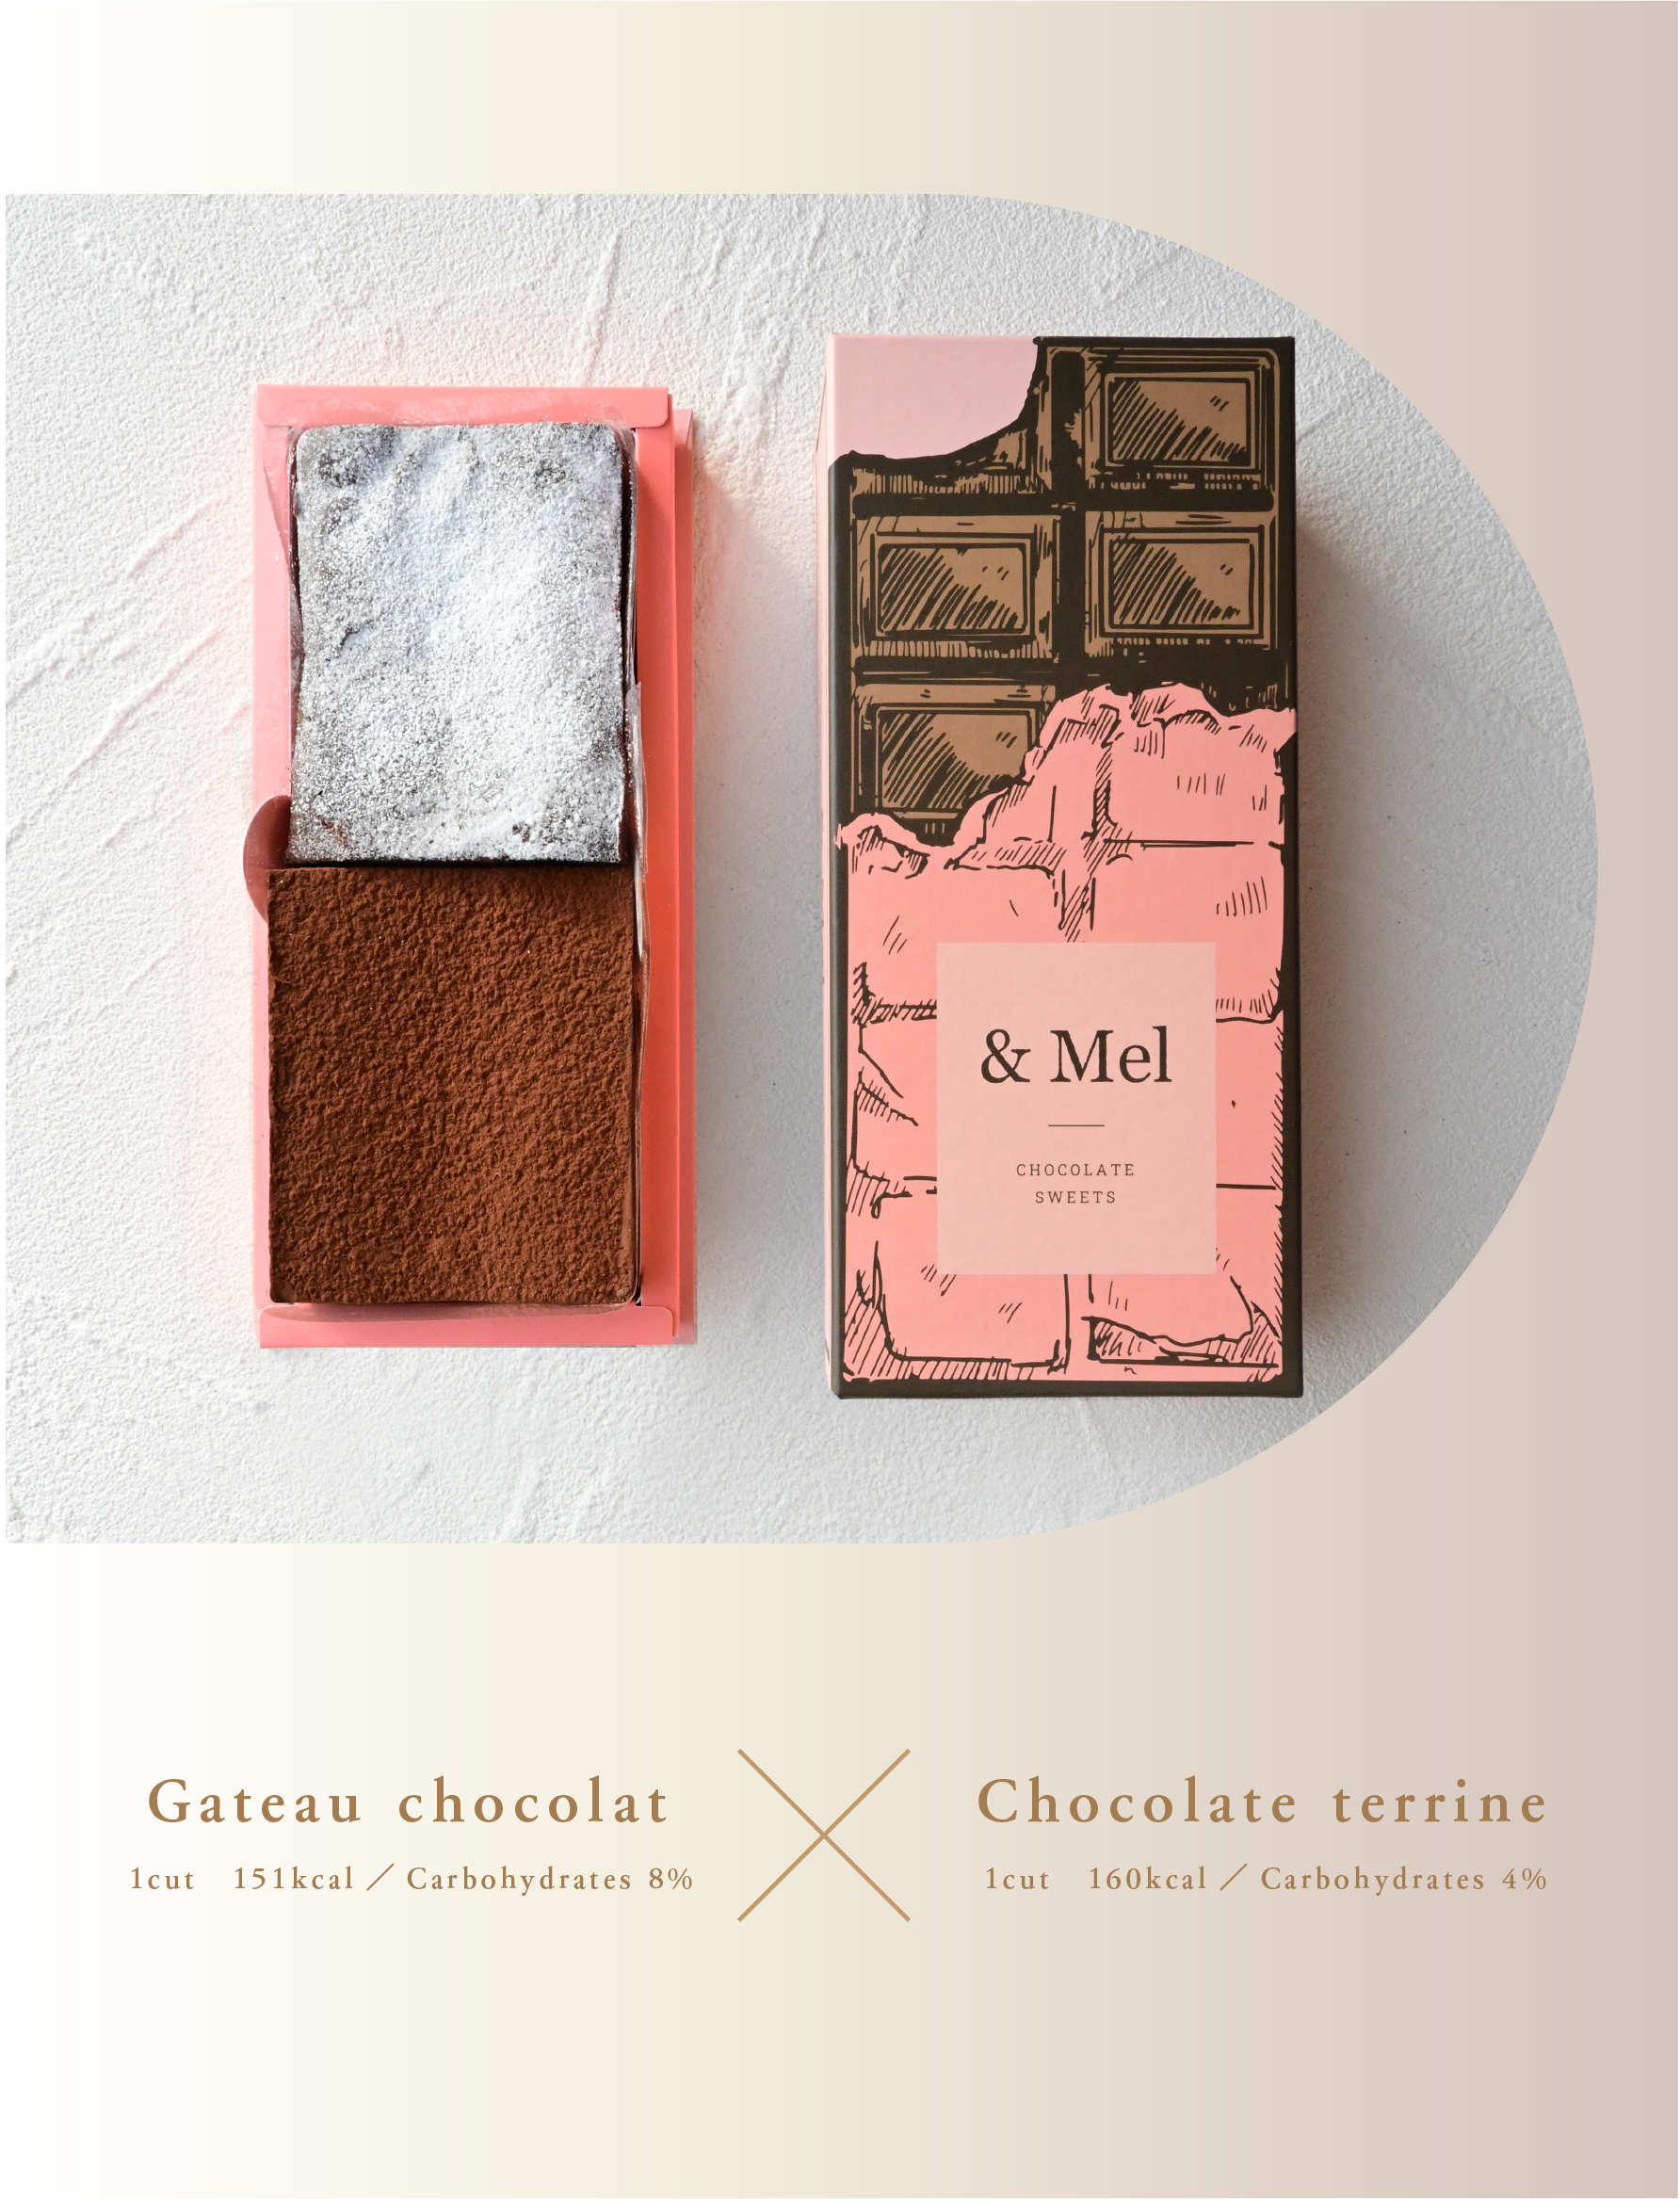 Chocolate terrine & Gateau chocolat